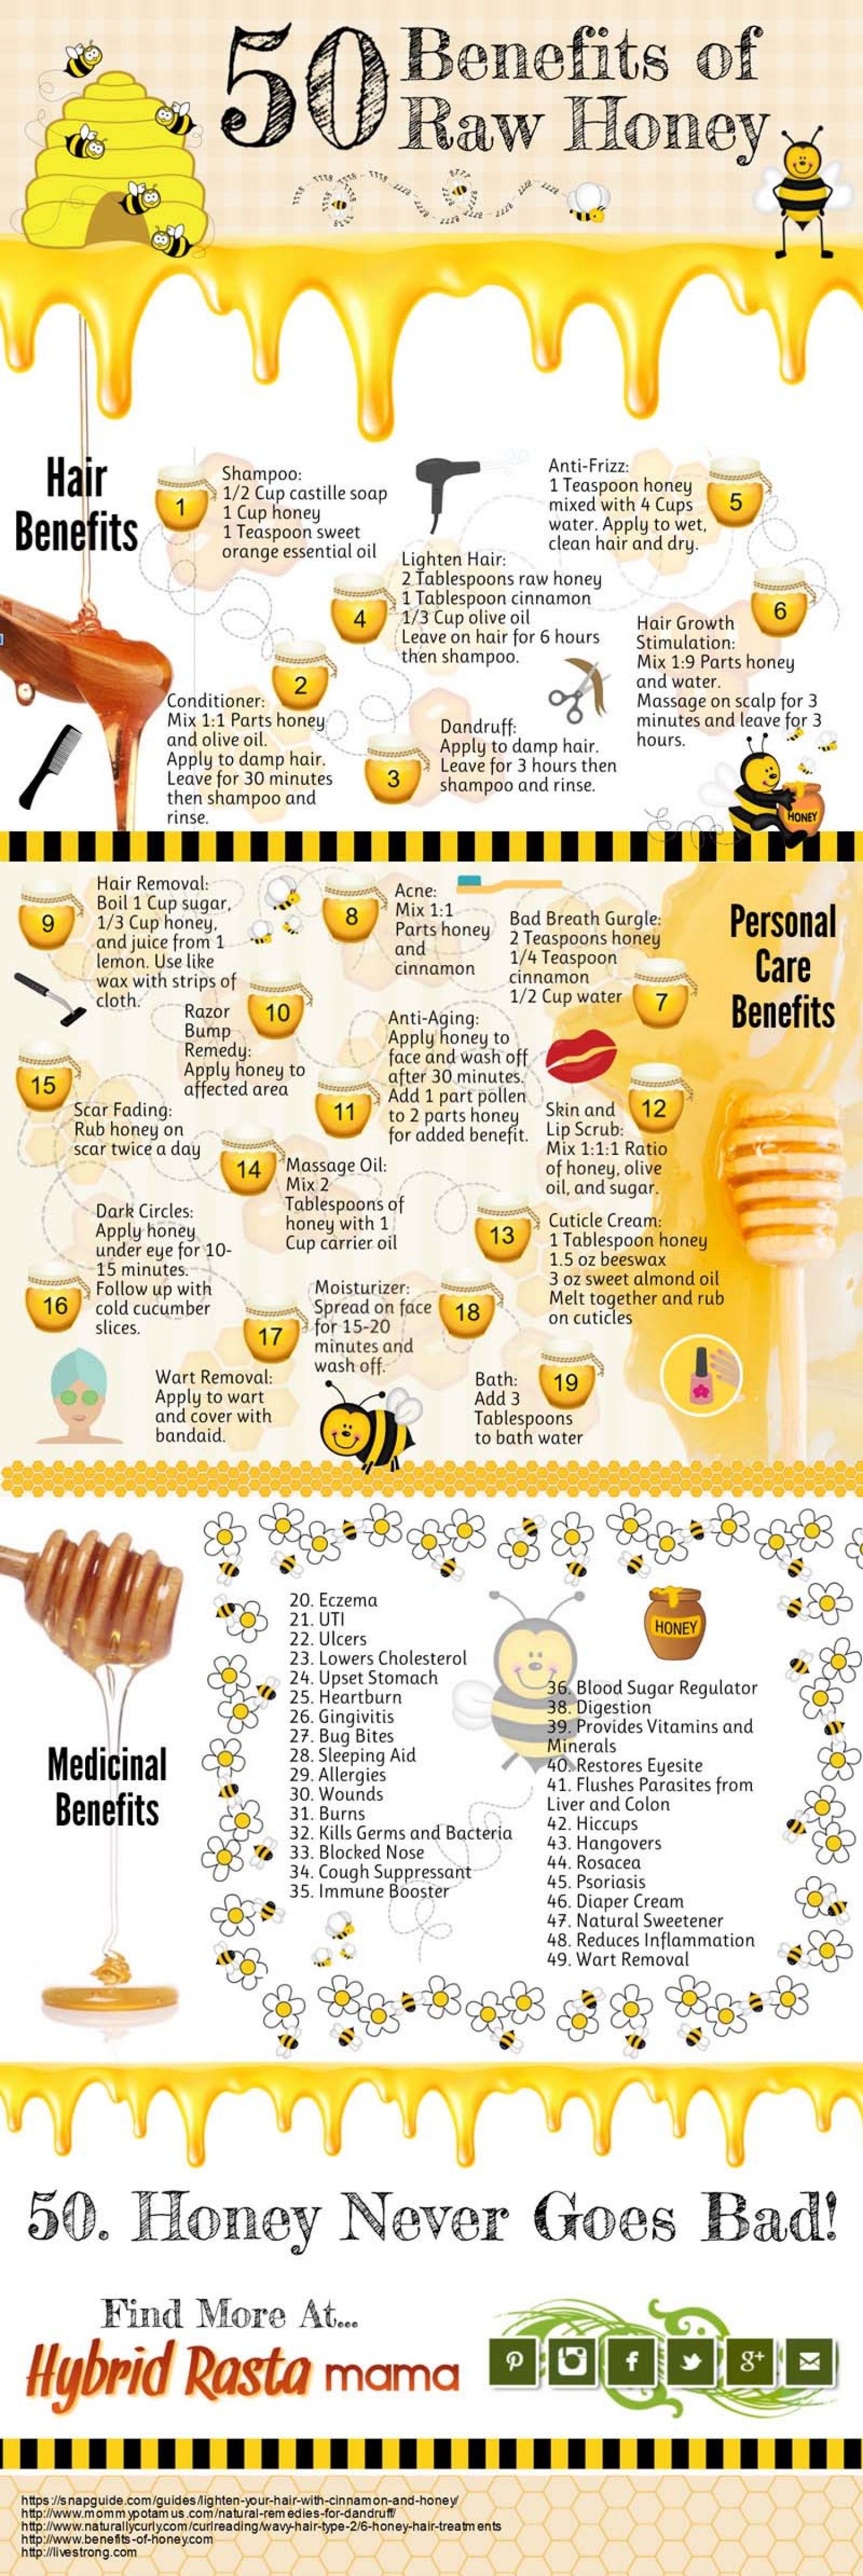 50 Benefits of Raw Honey